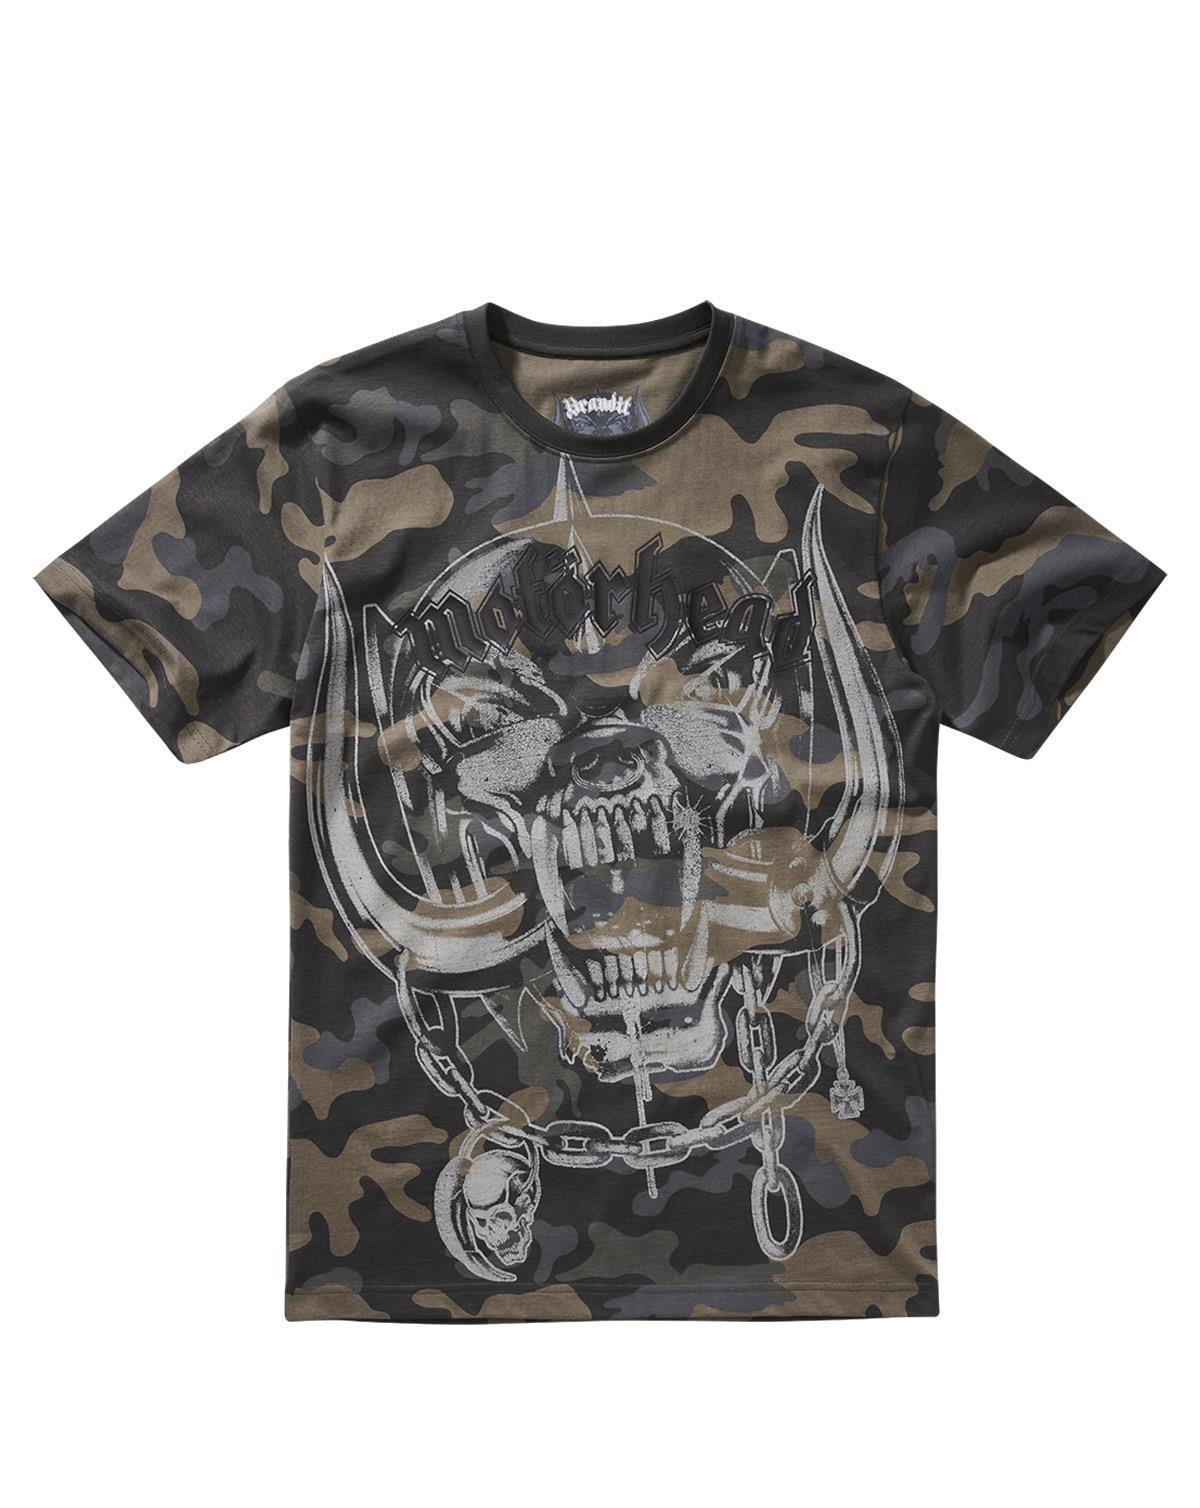 9: Brandit Motörhead T-shirt Warpig Print (Dark Camo, L)